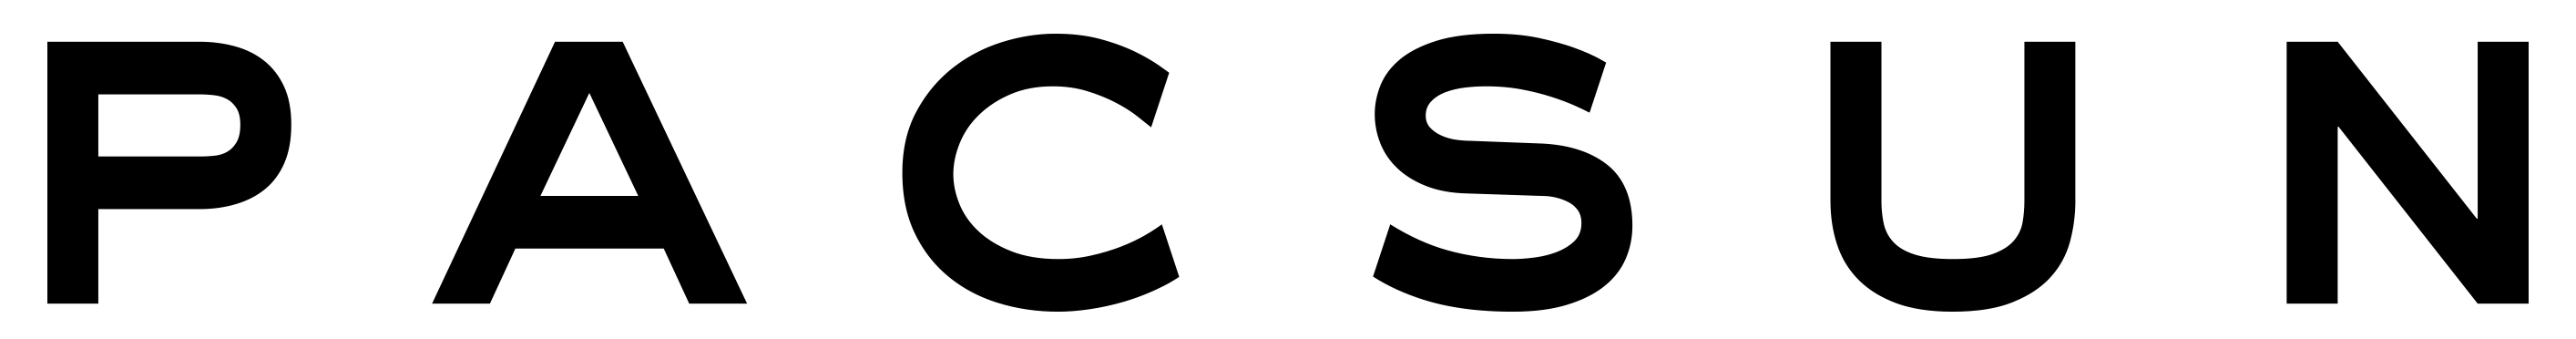 Pacsun Logos